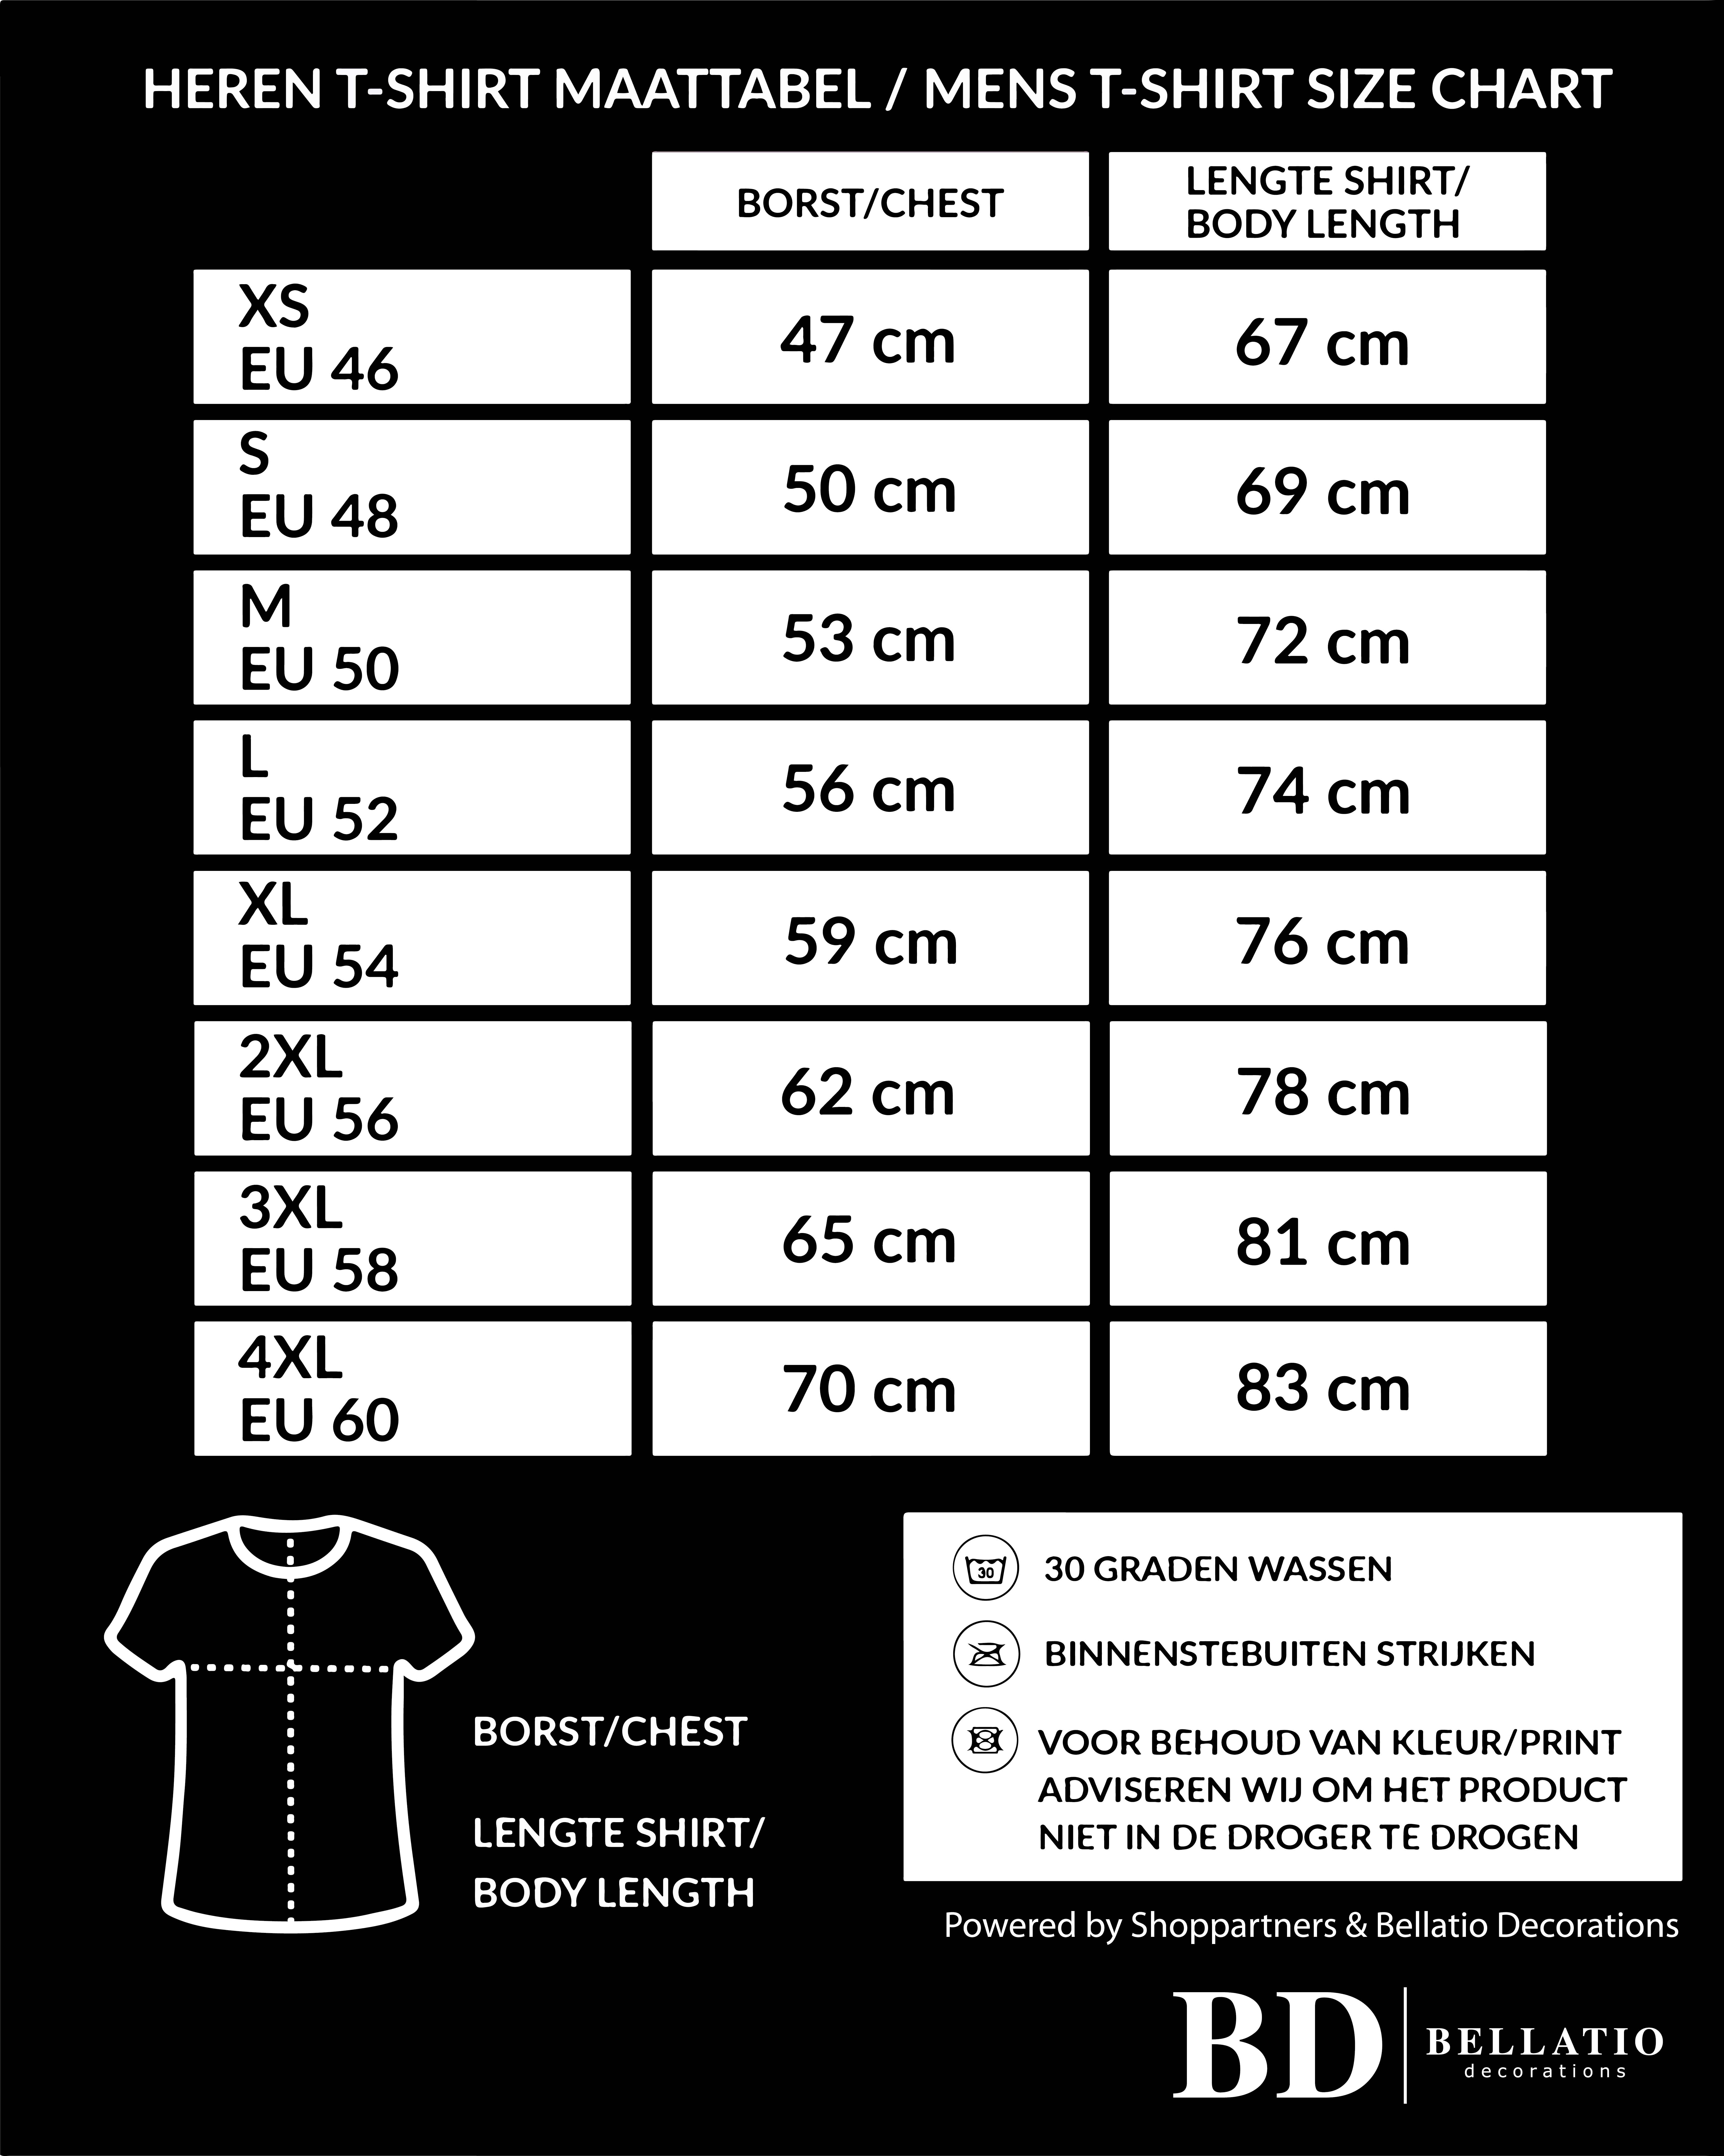 Black t-shirt with Limburg flag tie for men